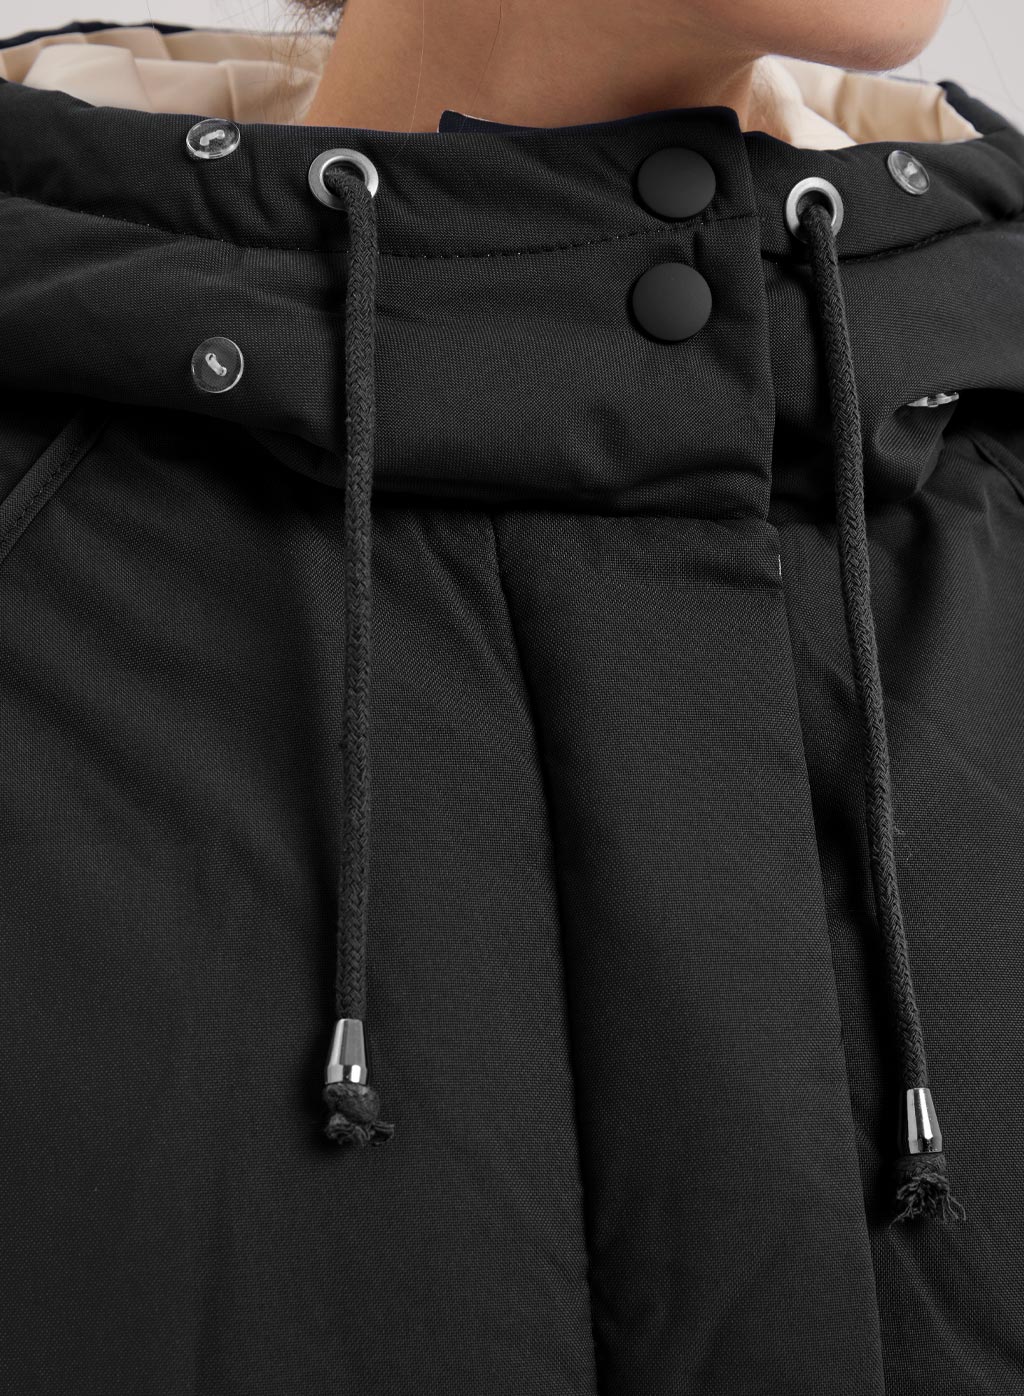 hiërarchie Stadscentrum makkelijk te gebruiken Drawstring Hooded Parka | Warm Black Jacket | Nap Loungewear